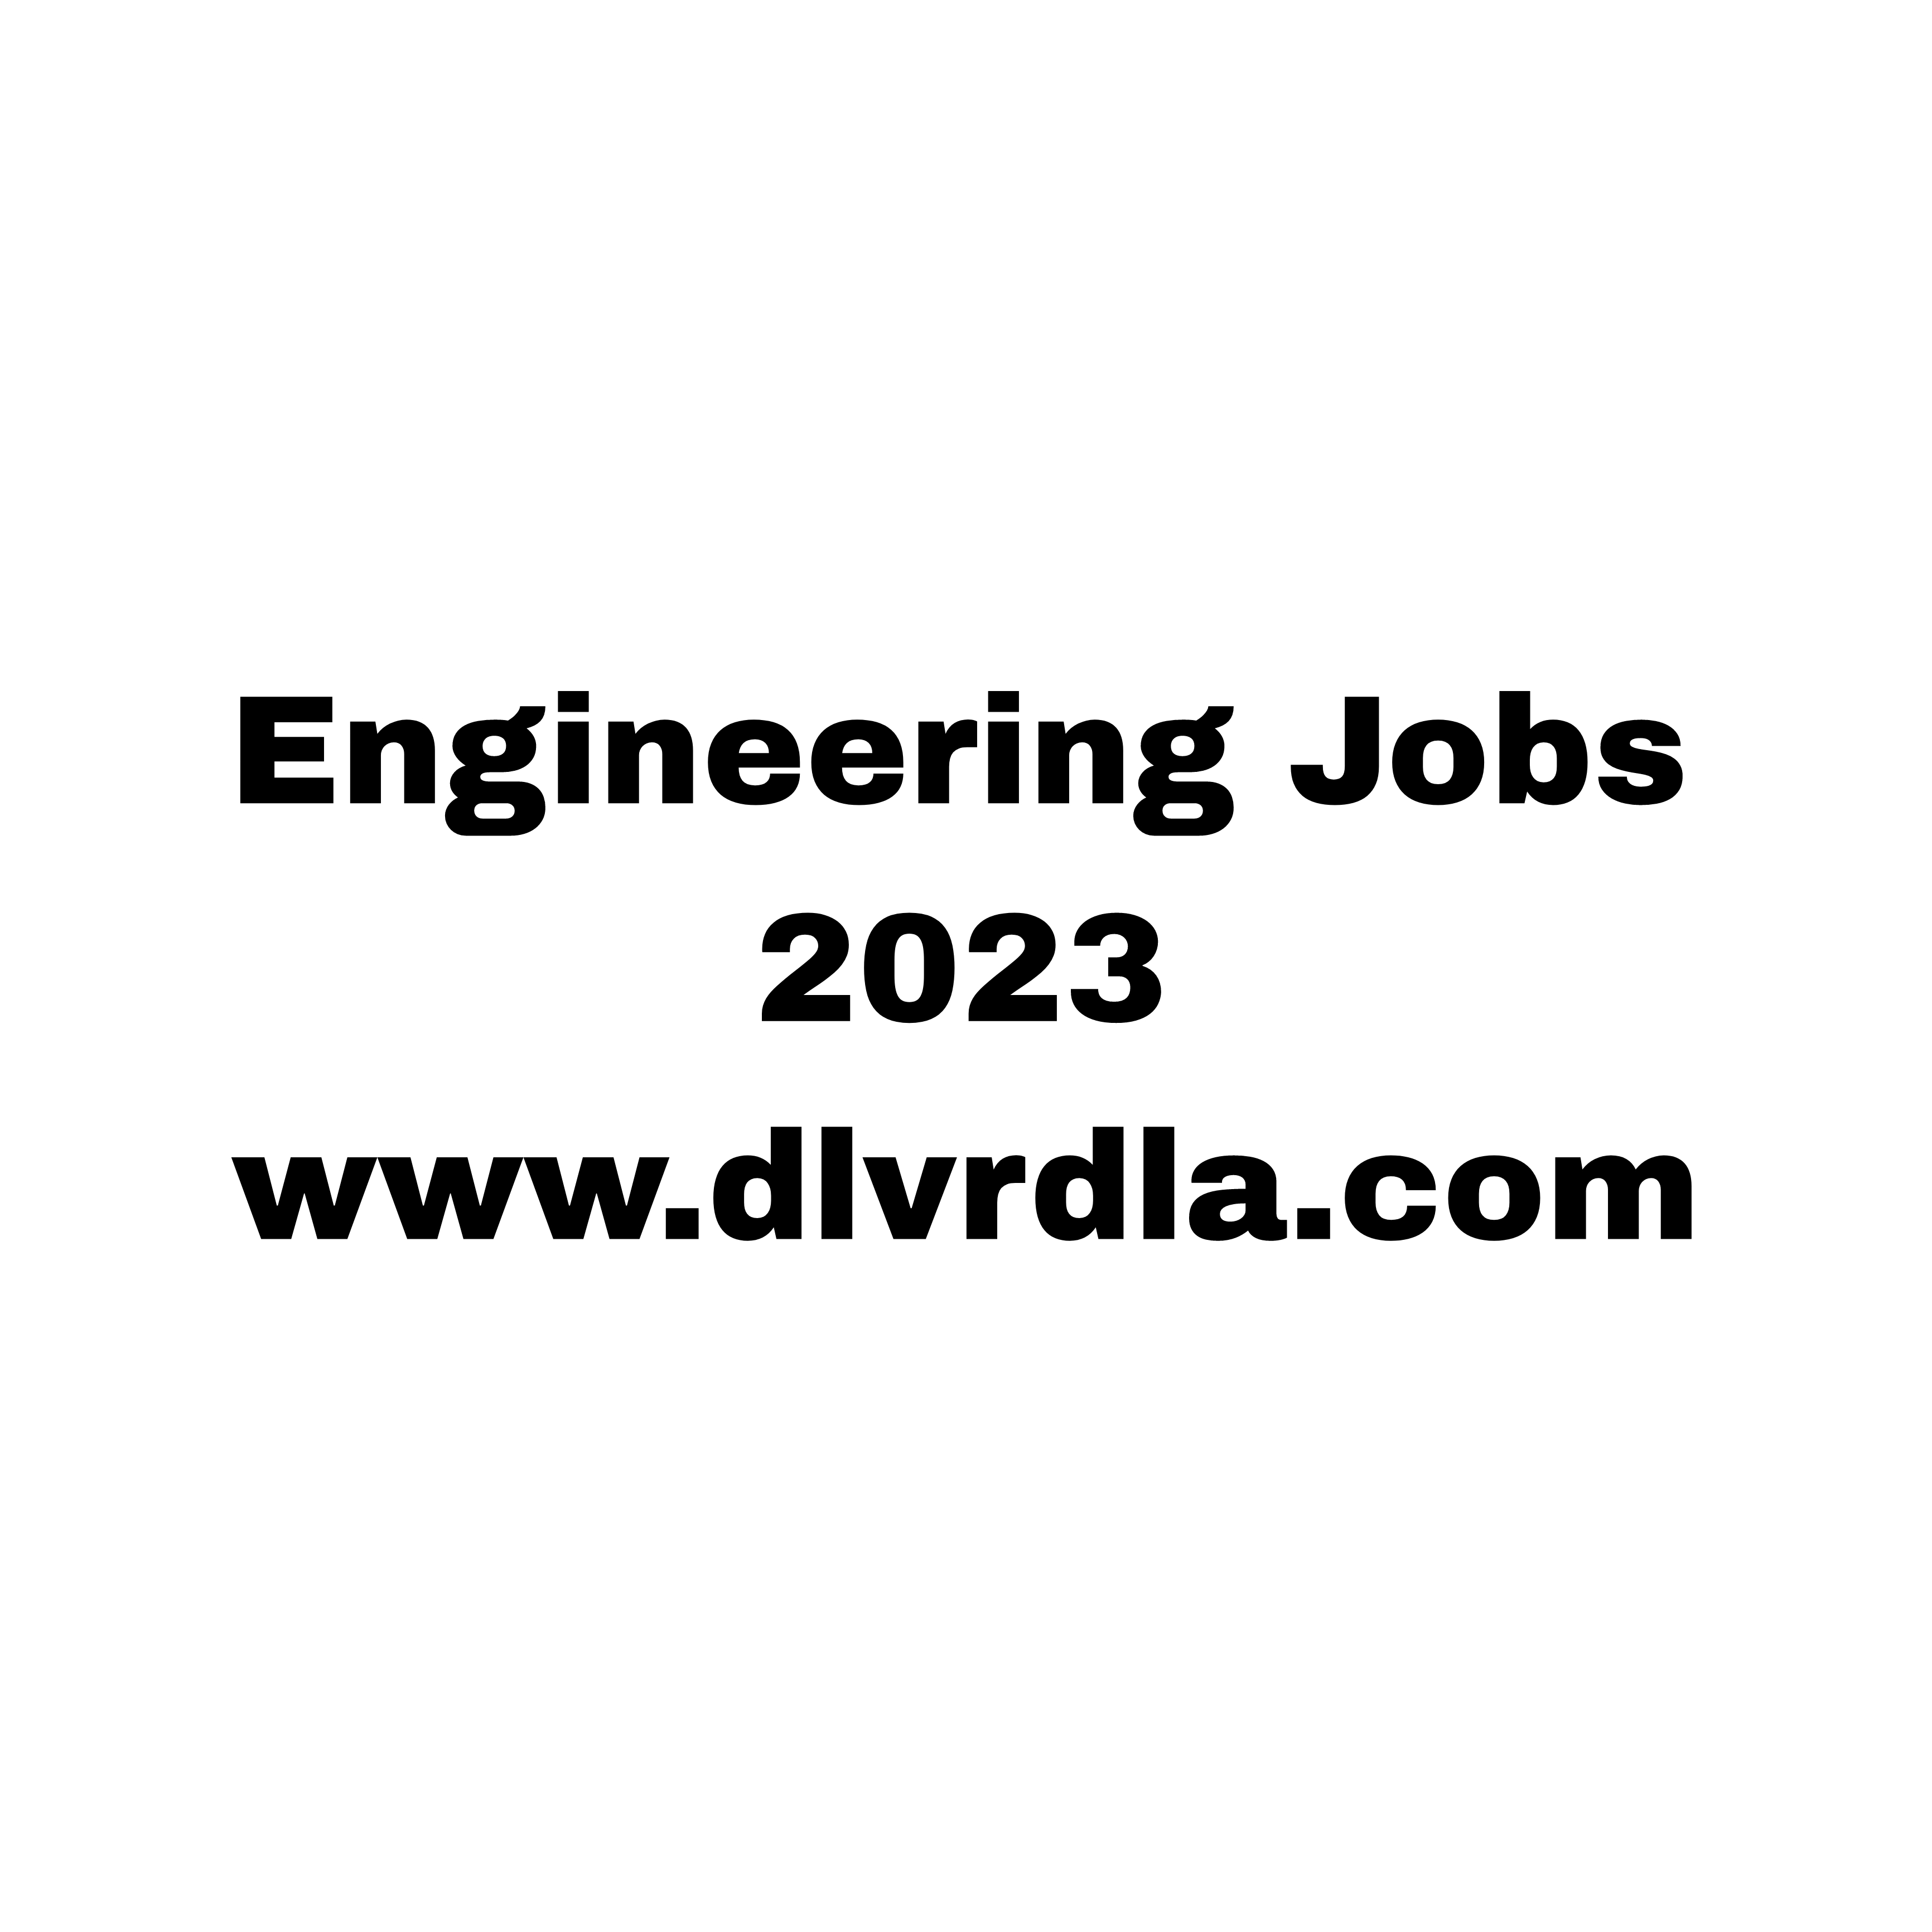 Engineering Jobs 2023